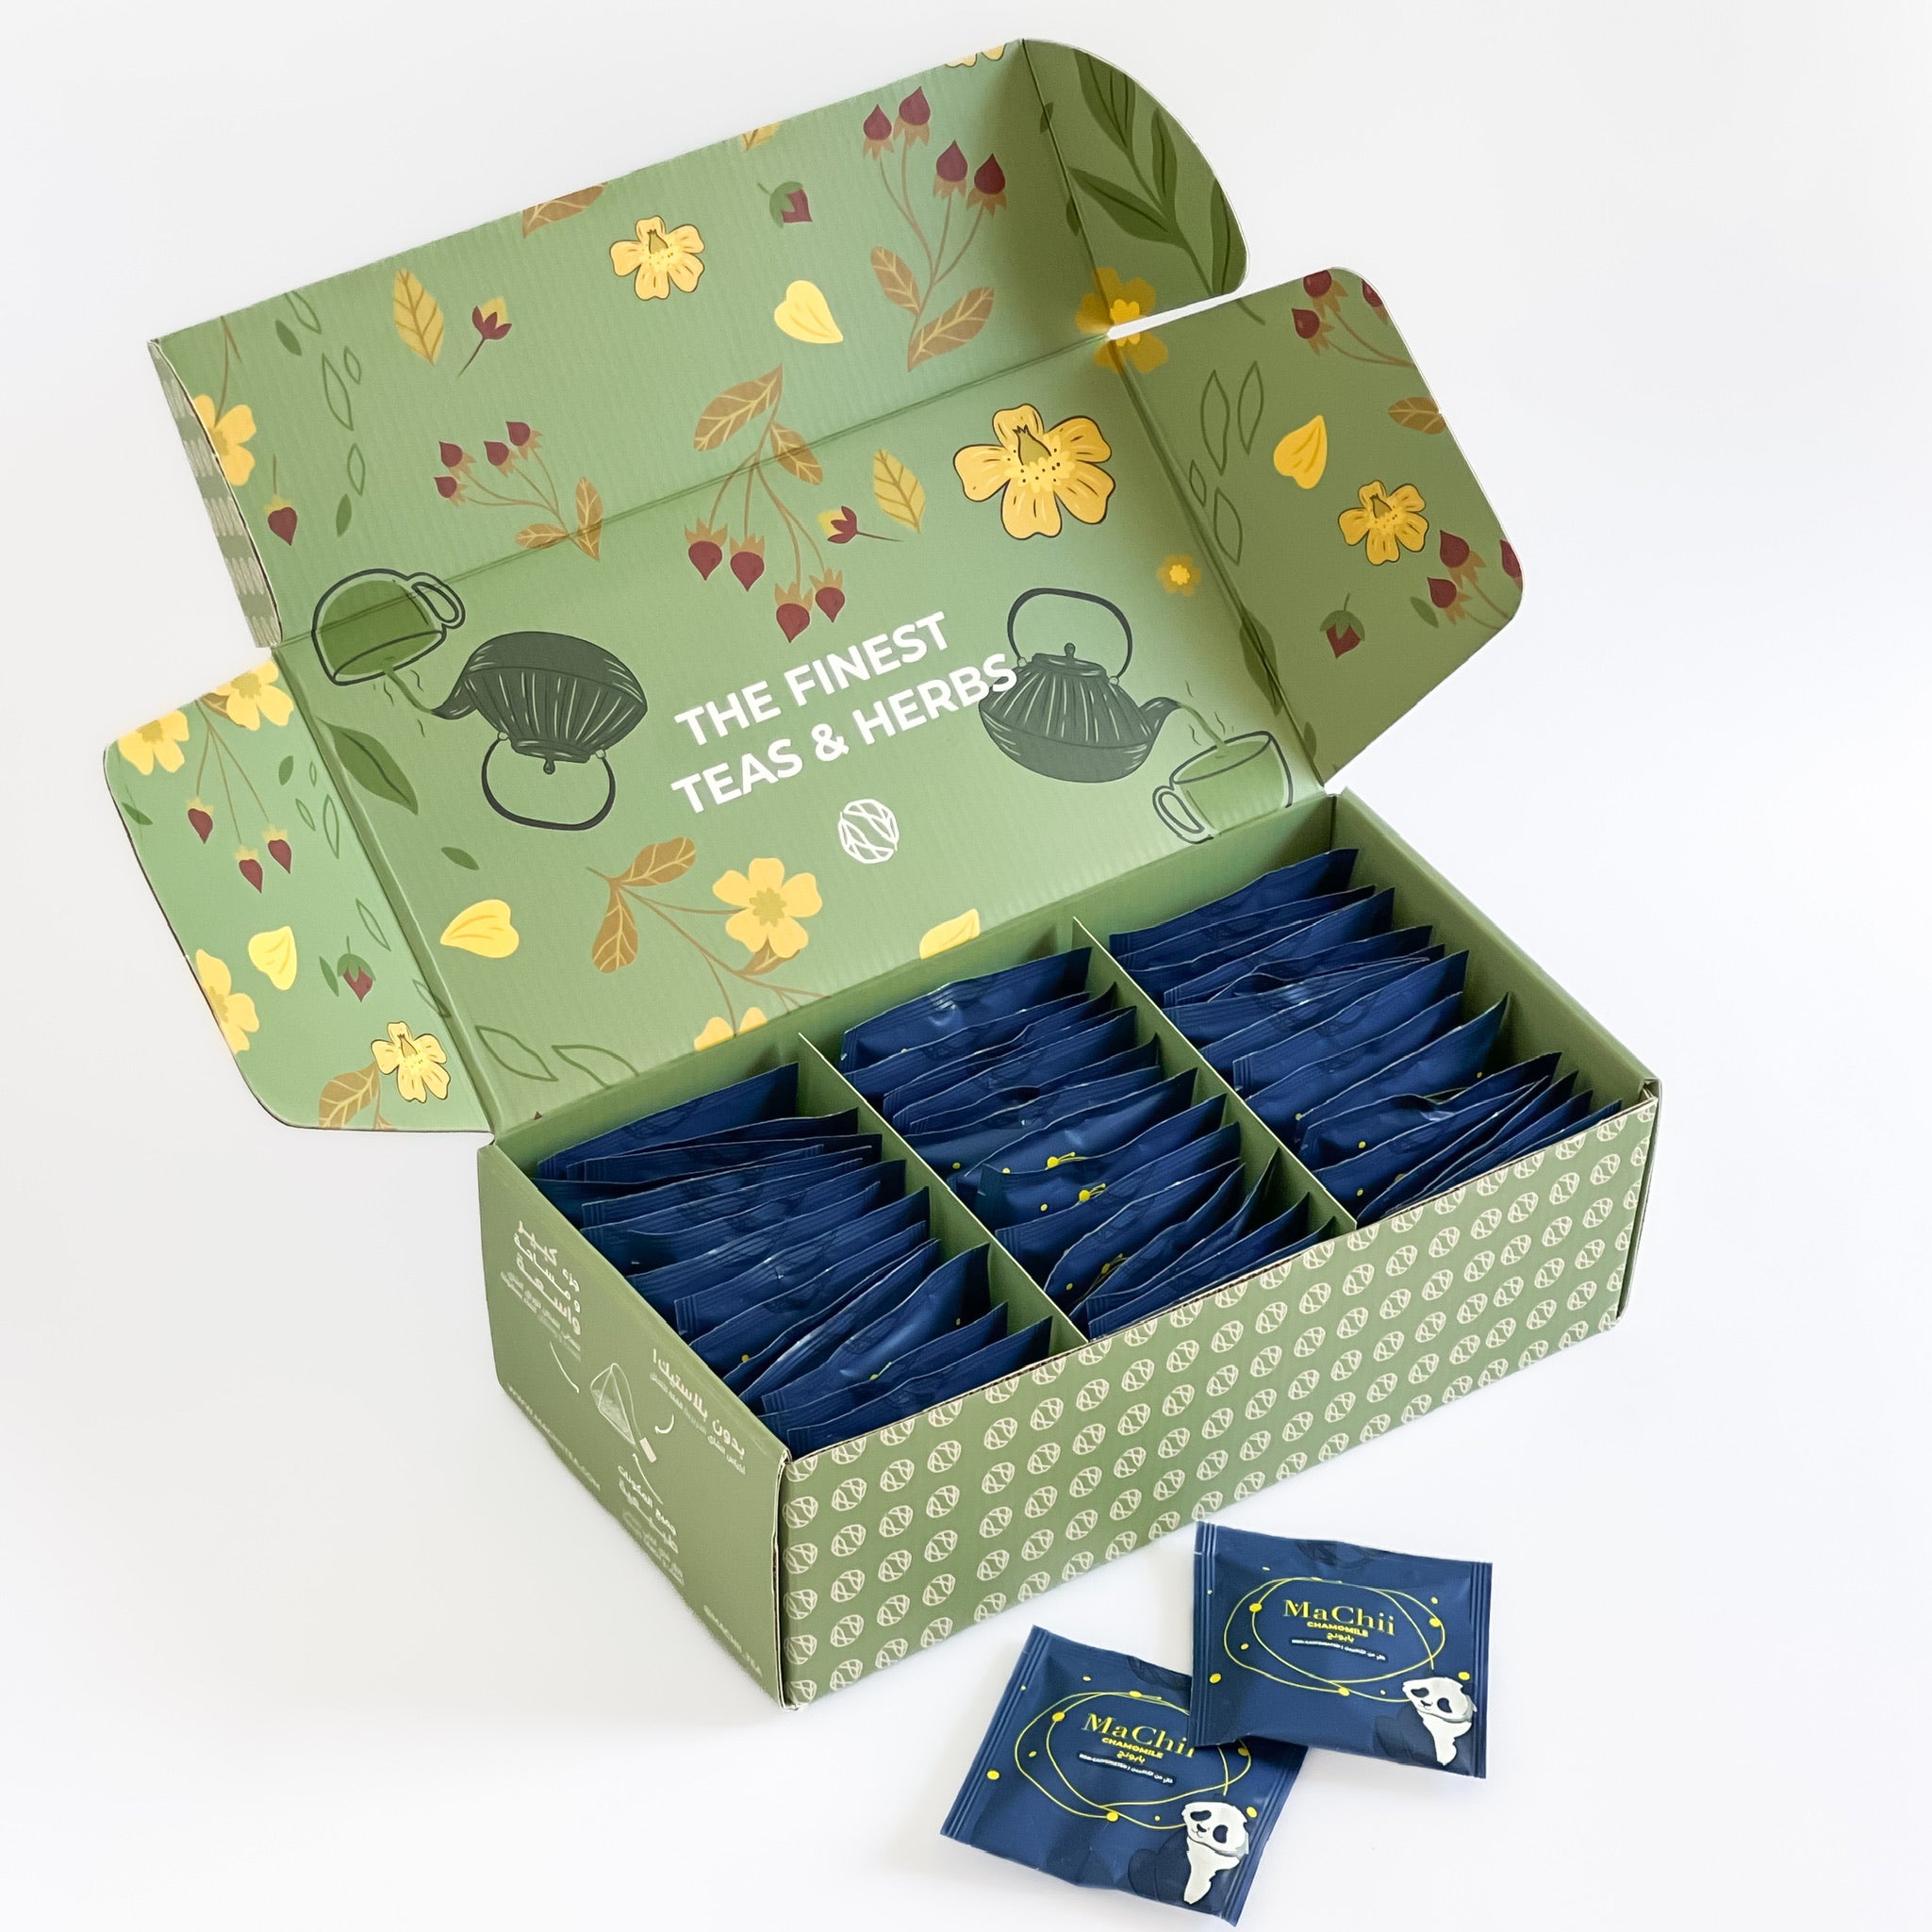 50 envelope tea bags in a large green MaChii Tea box.